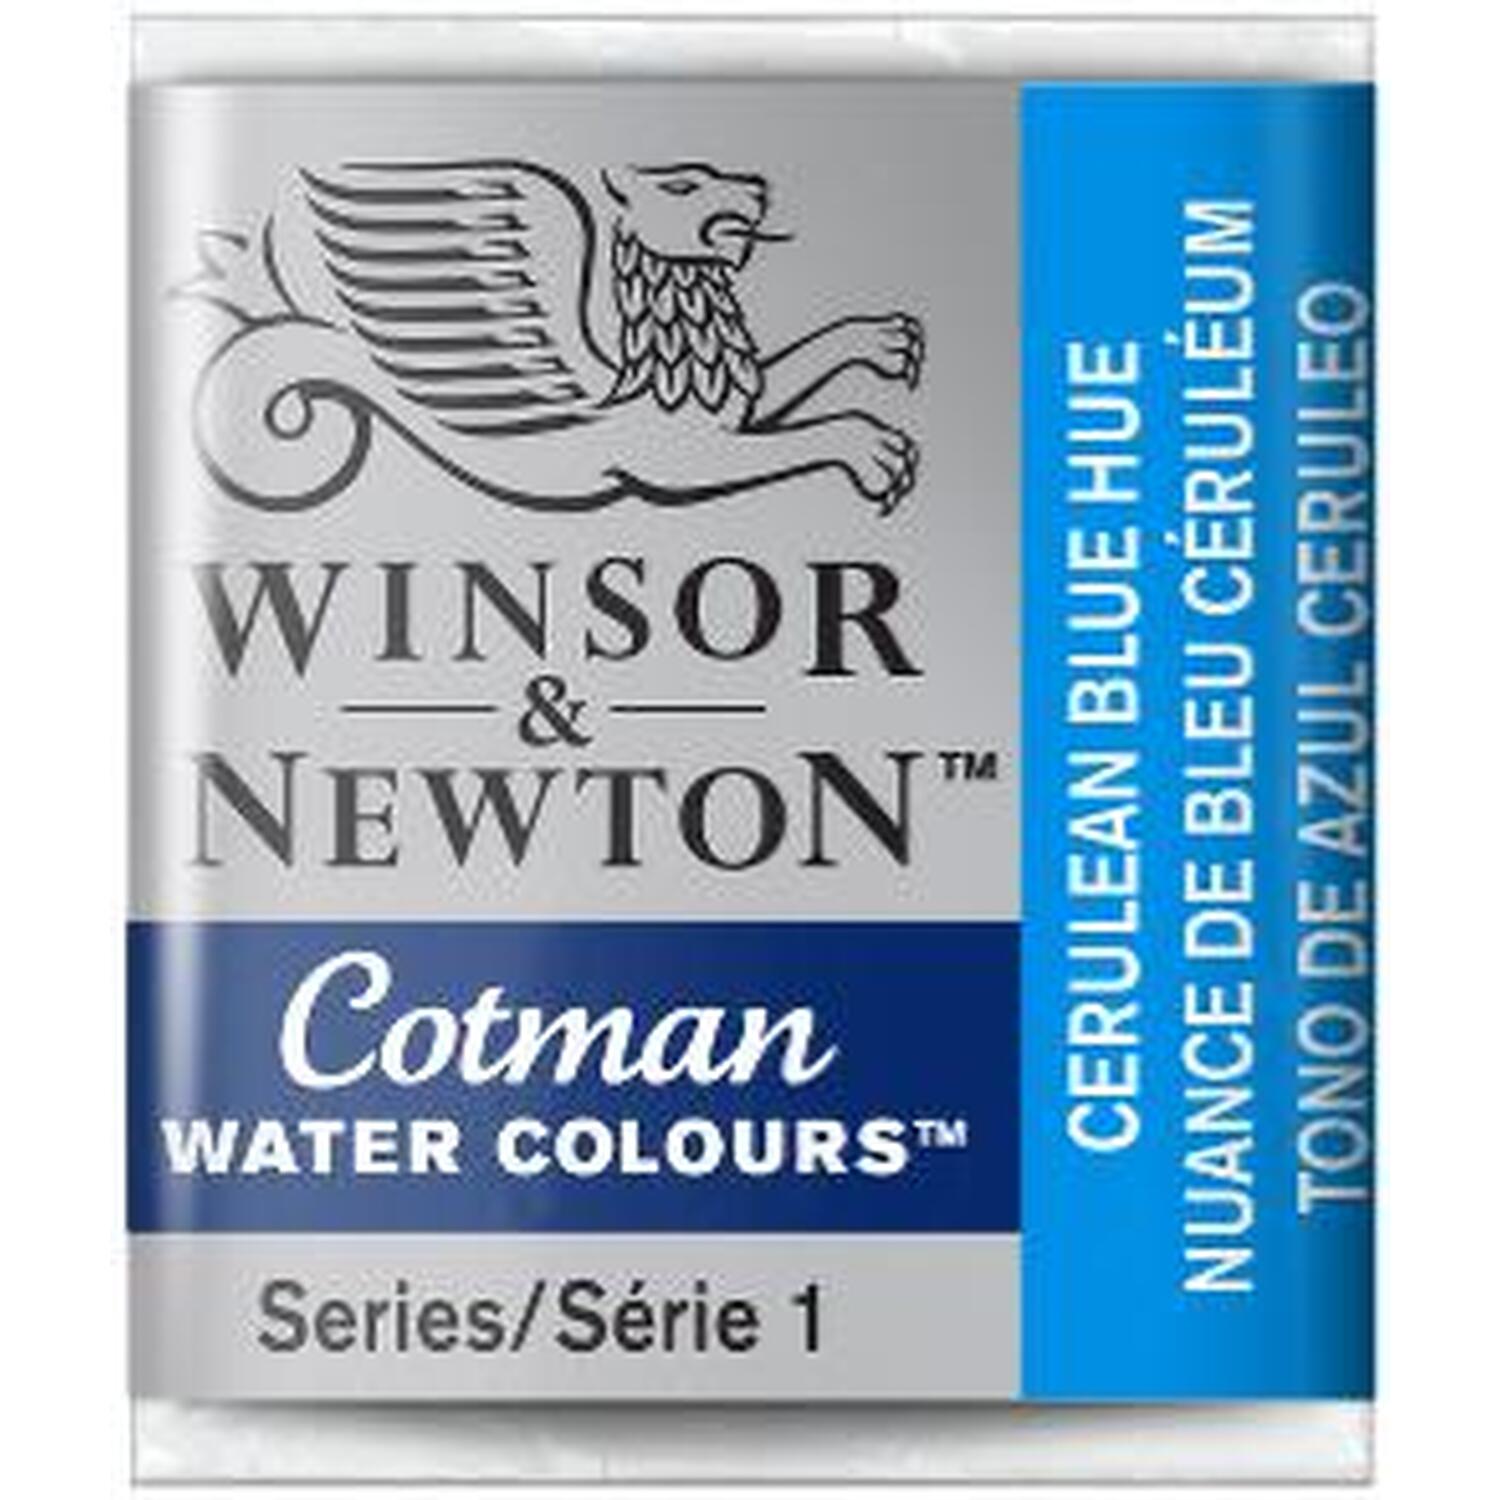 Winsor and Newton Cotman Watercolour Half Pan Paint - Cerulean Blue Hue Image